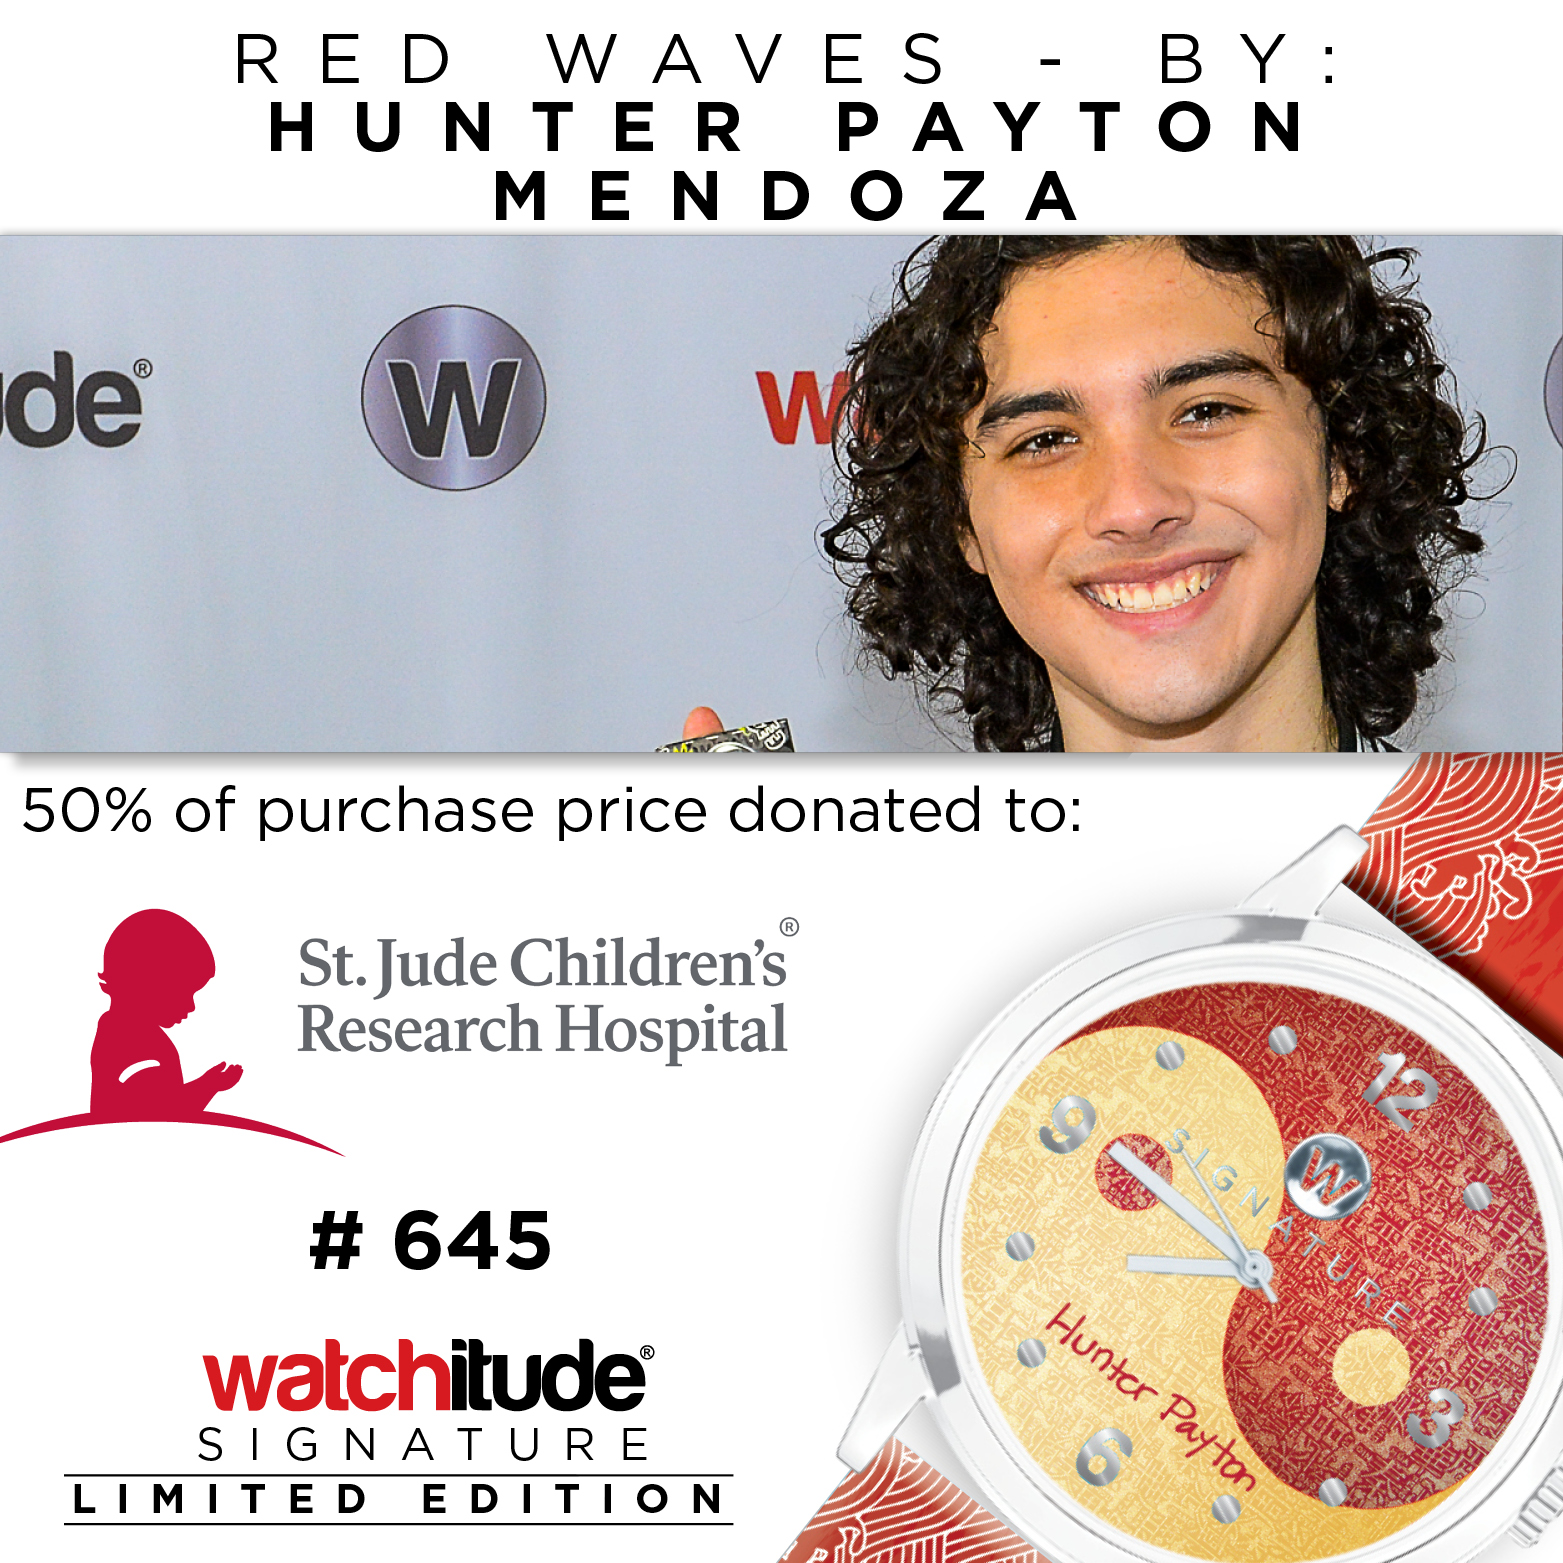 Red Waves - Hunter Payton Mendoza Signature watch